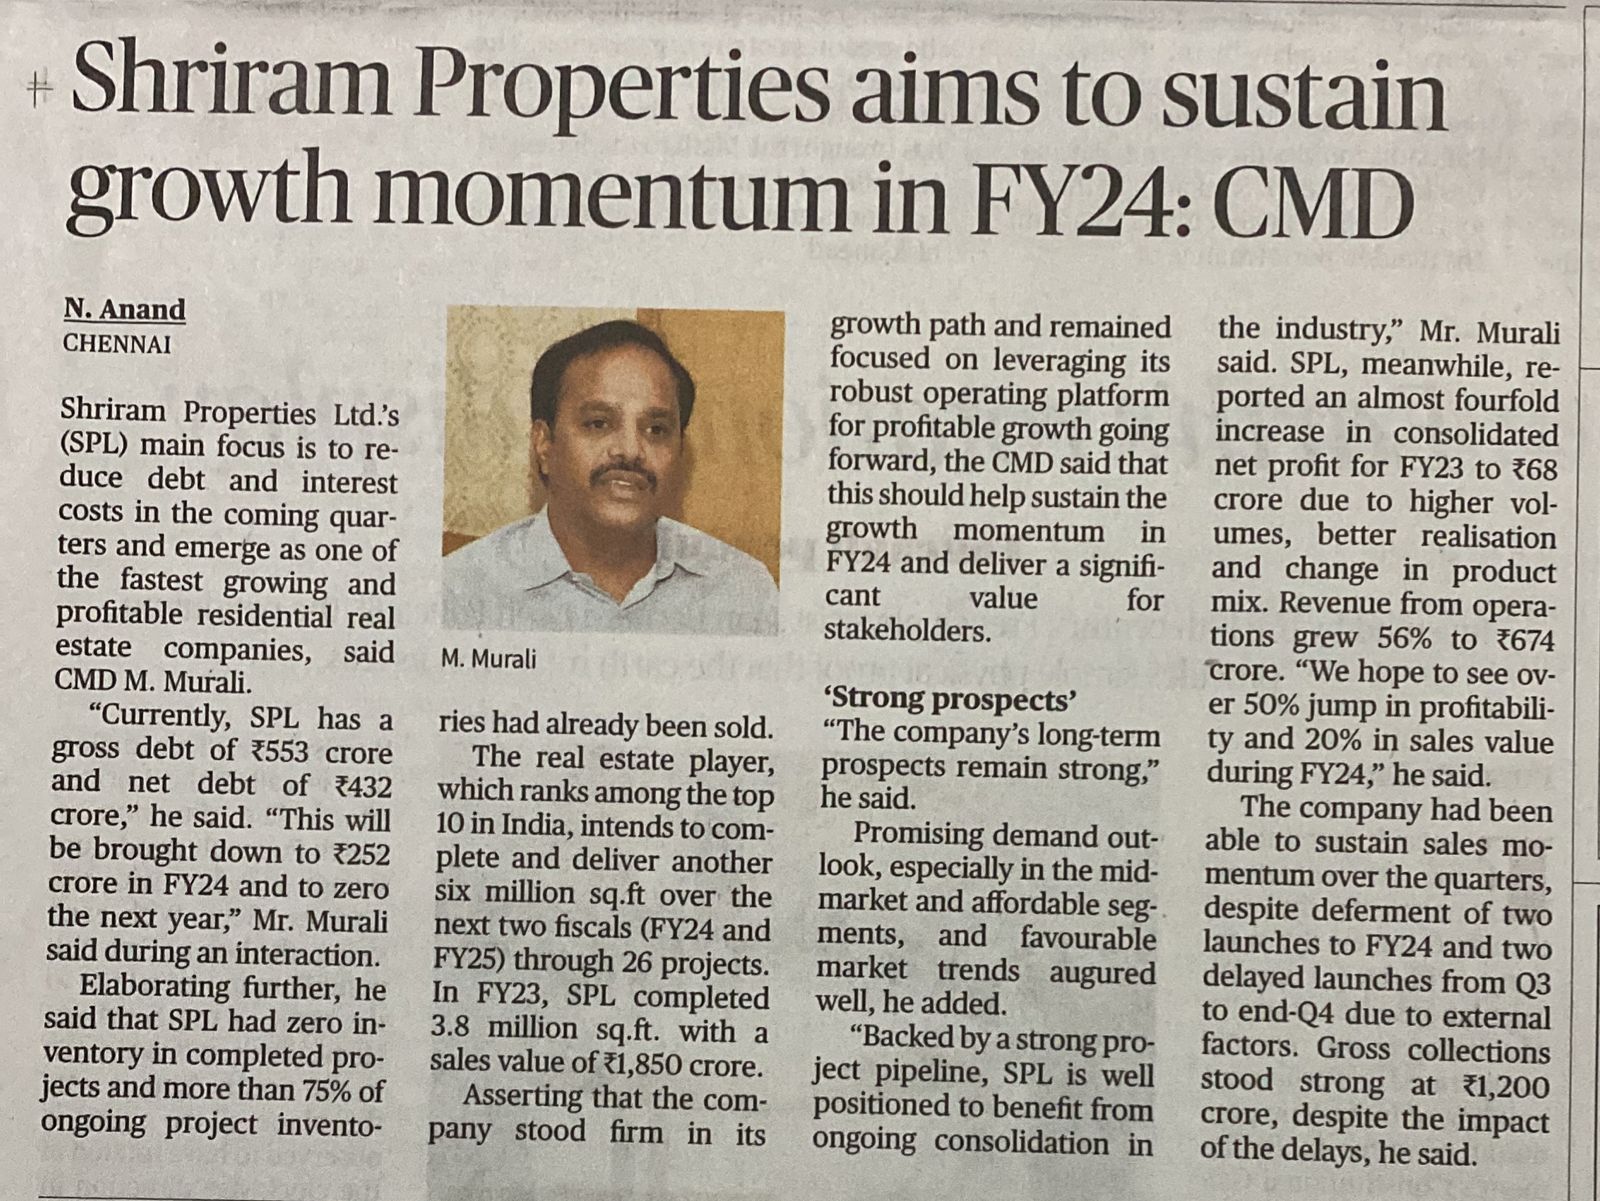 Shriram Properties Aims To Sustain Growth Momentum In FY24: CMD